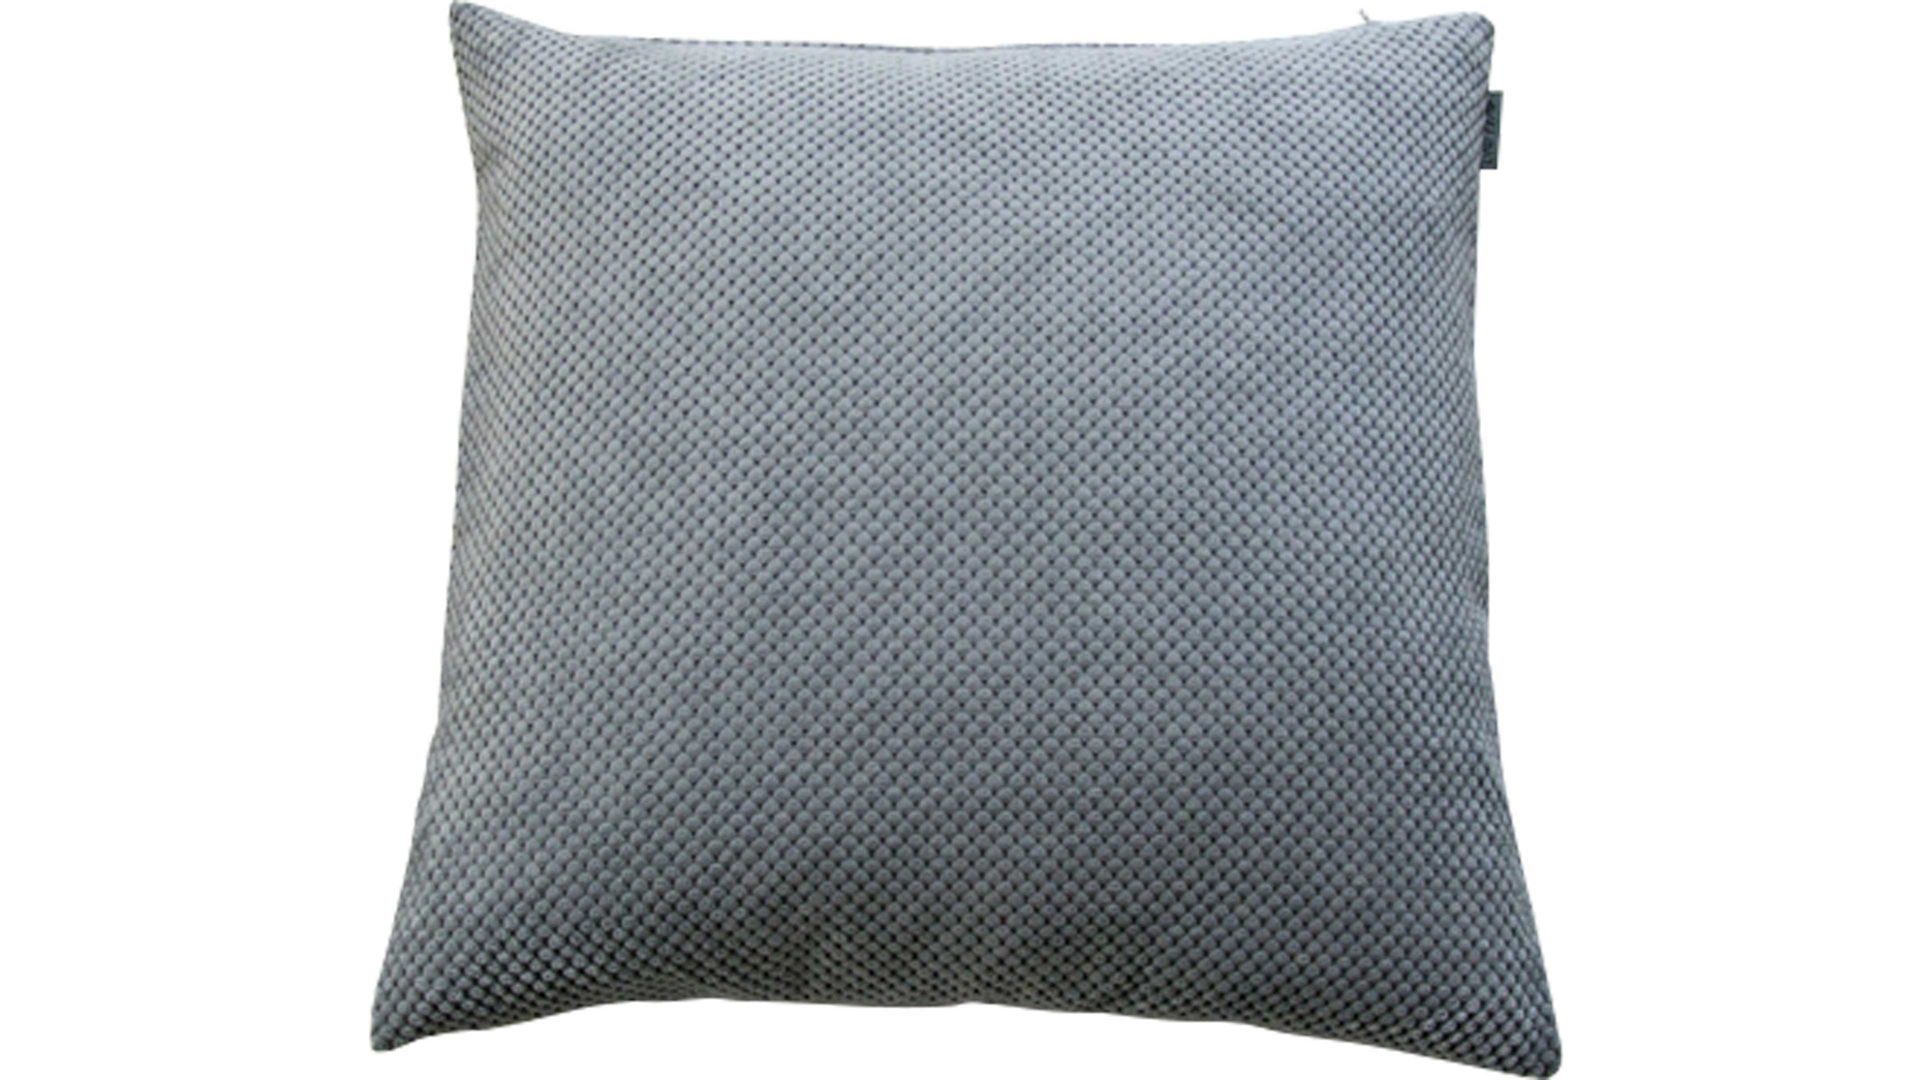 Kissenbezug /-hülle Lonczyk aus Stoff in Grau Kissenhülle Ben silberfarbenes Mischgewebe – ca. 48 x 48 cm